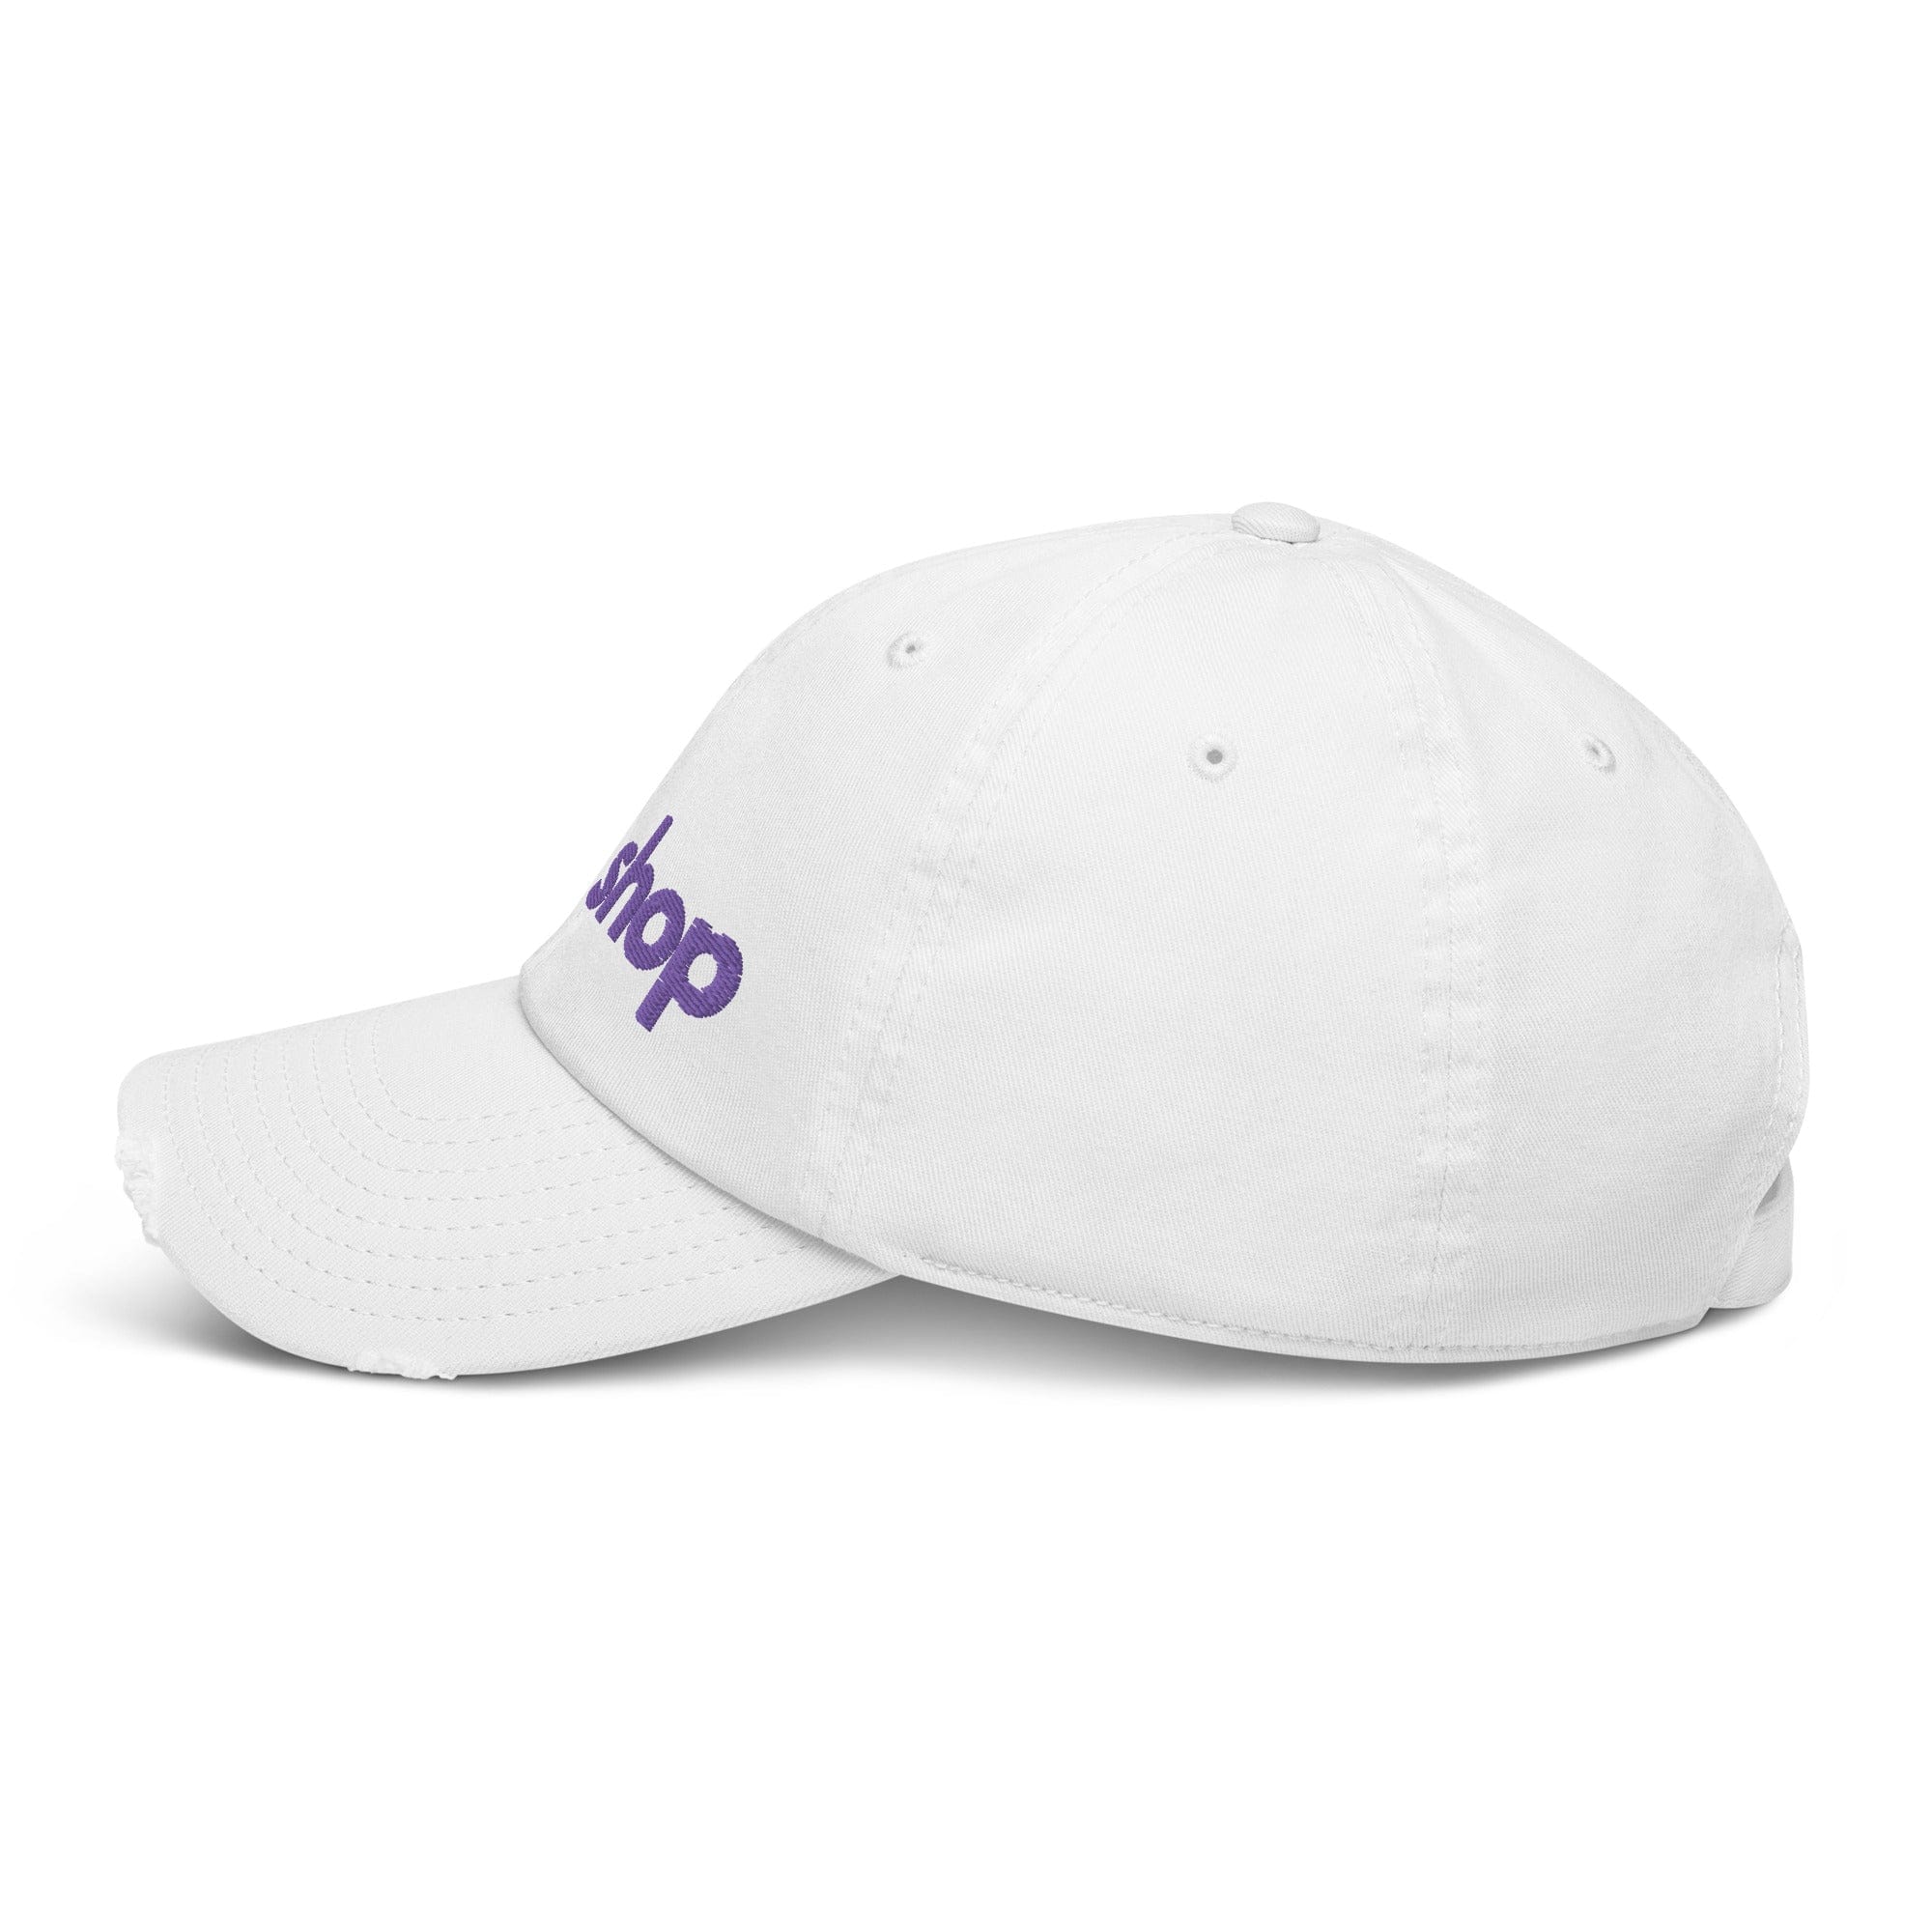 Weathered Guilt Shop Brand Baseball Hat